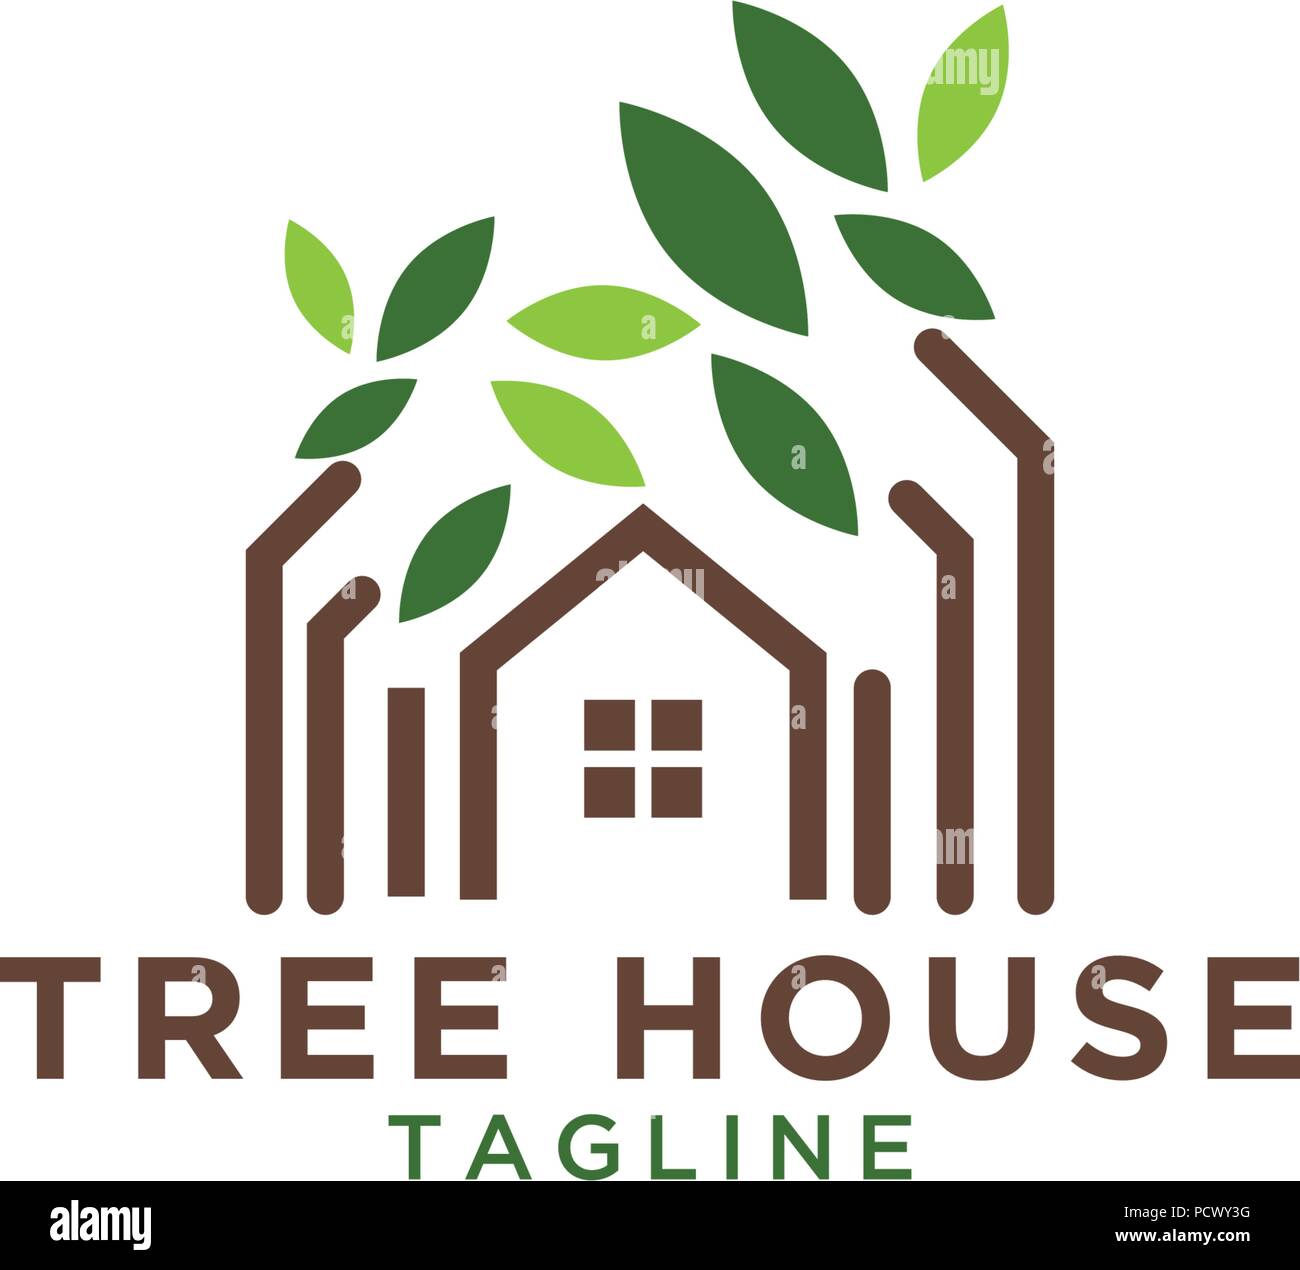 Illustration of tree house logo design template Stock Vector